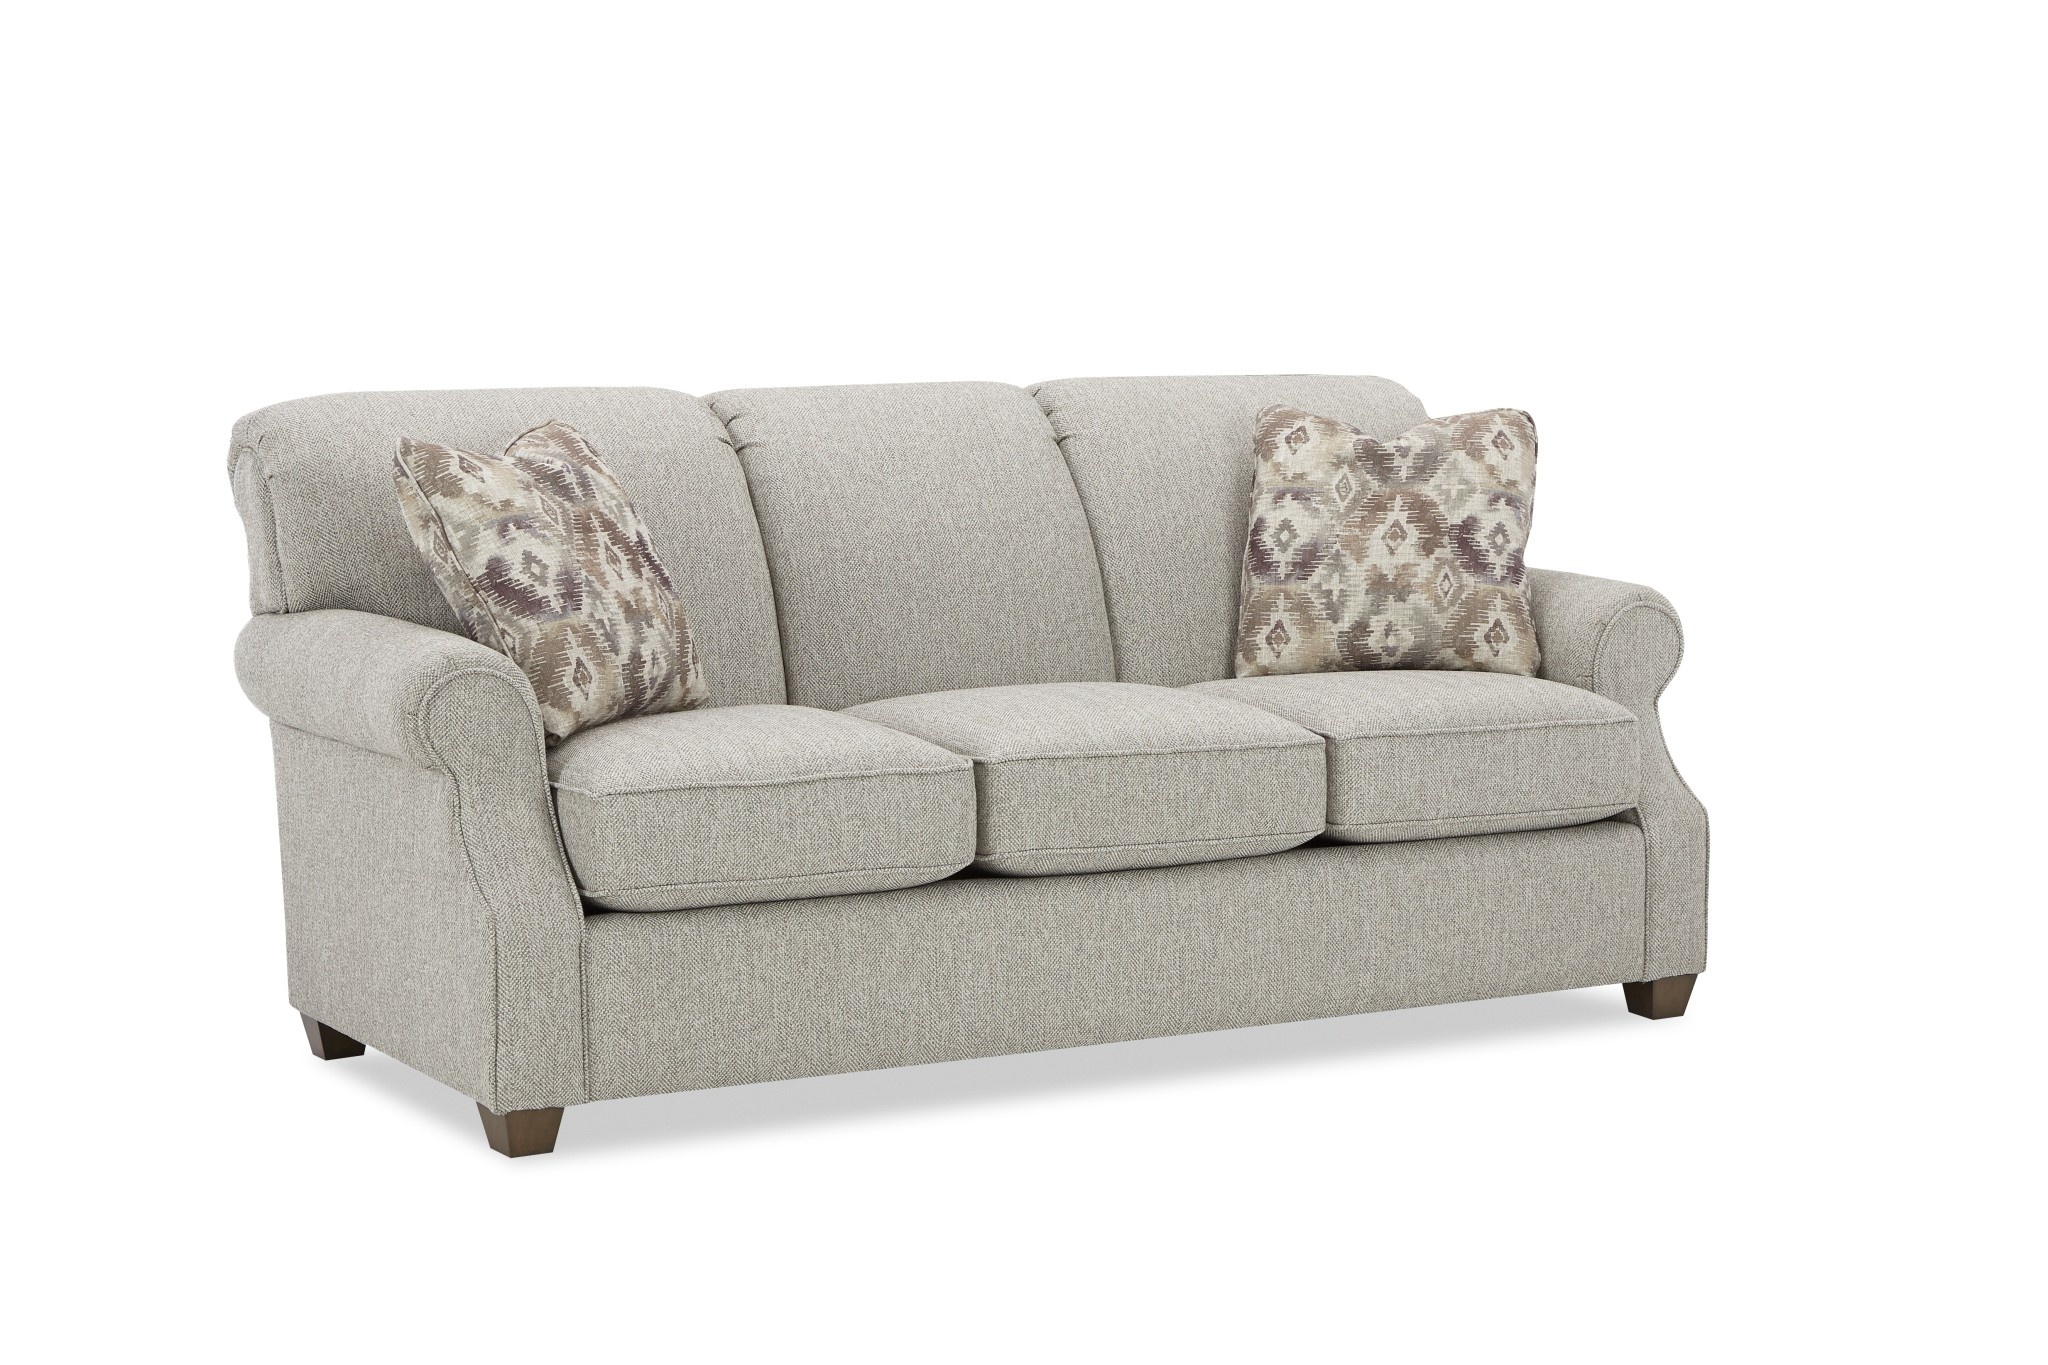 Craftmaster Furniture 7126 Sofa